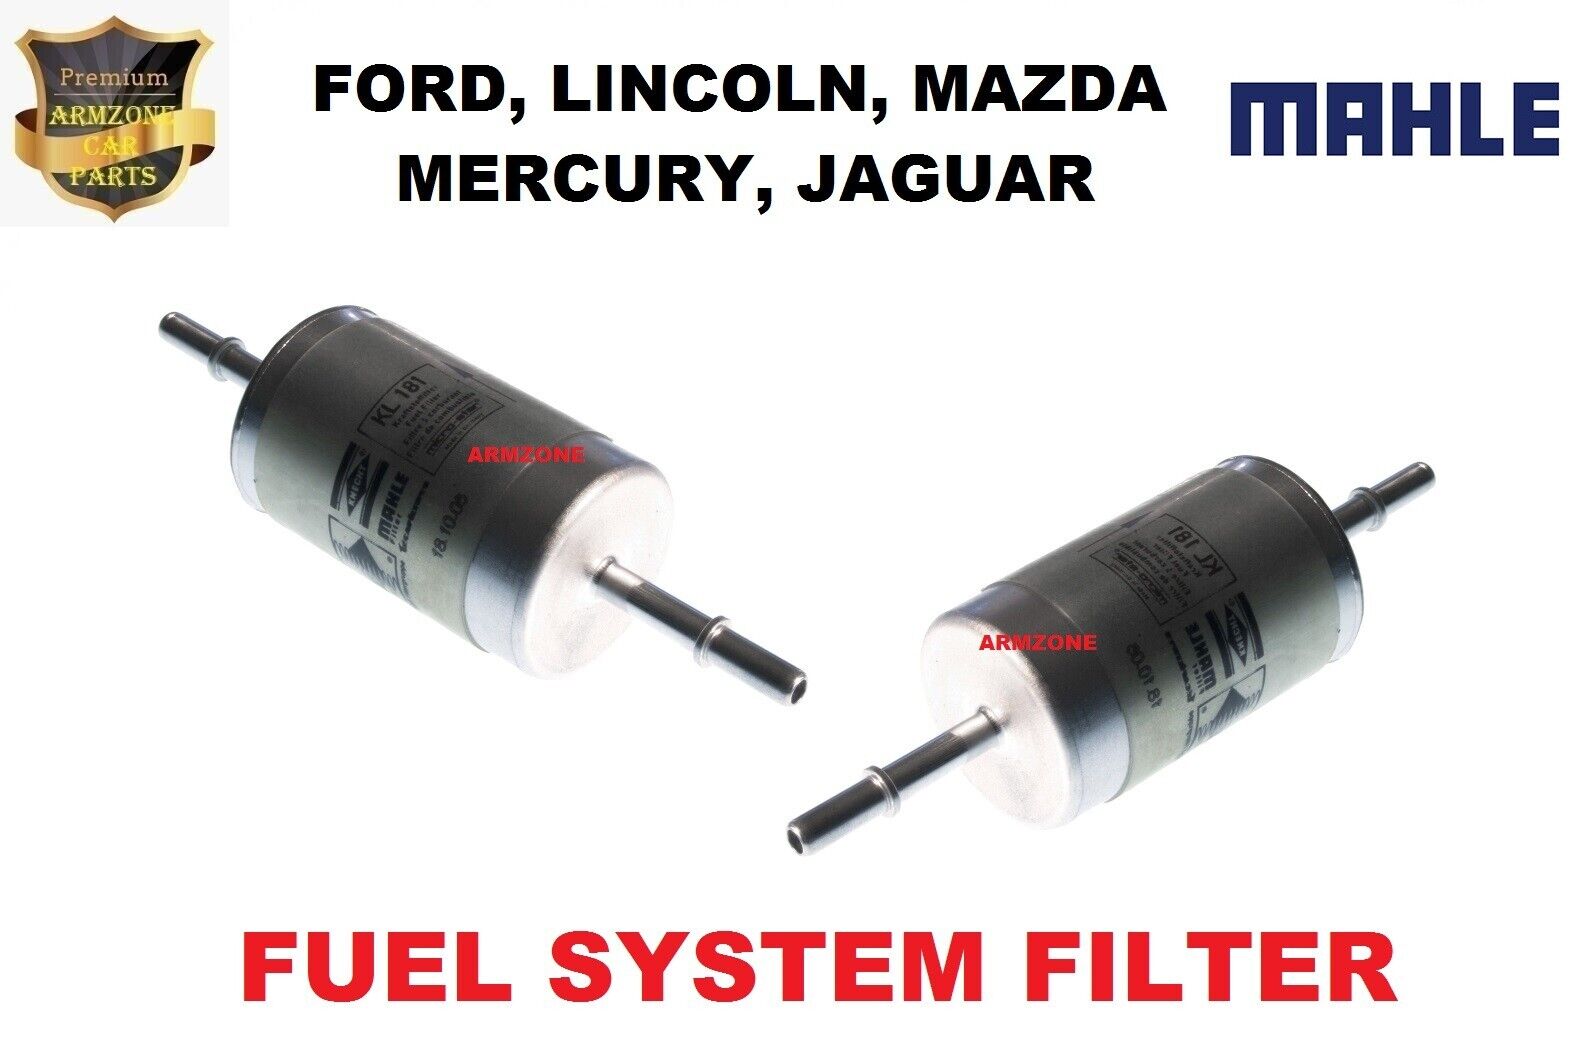 Fuel Filter For Ford, Lincoln, Mercury, Mazda, Jaguar Mahle OEM